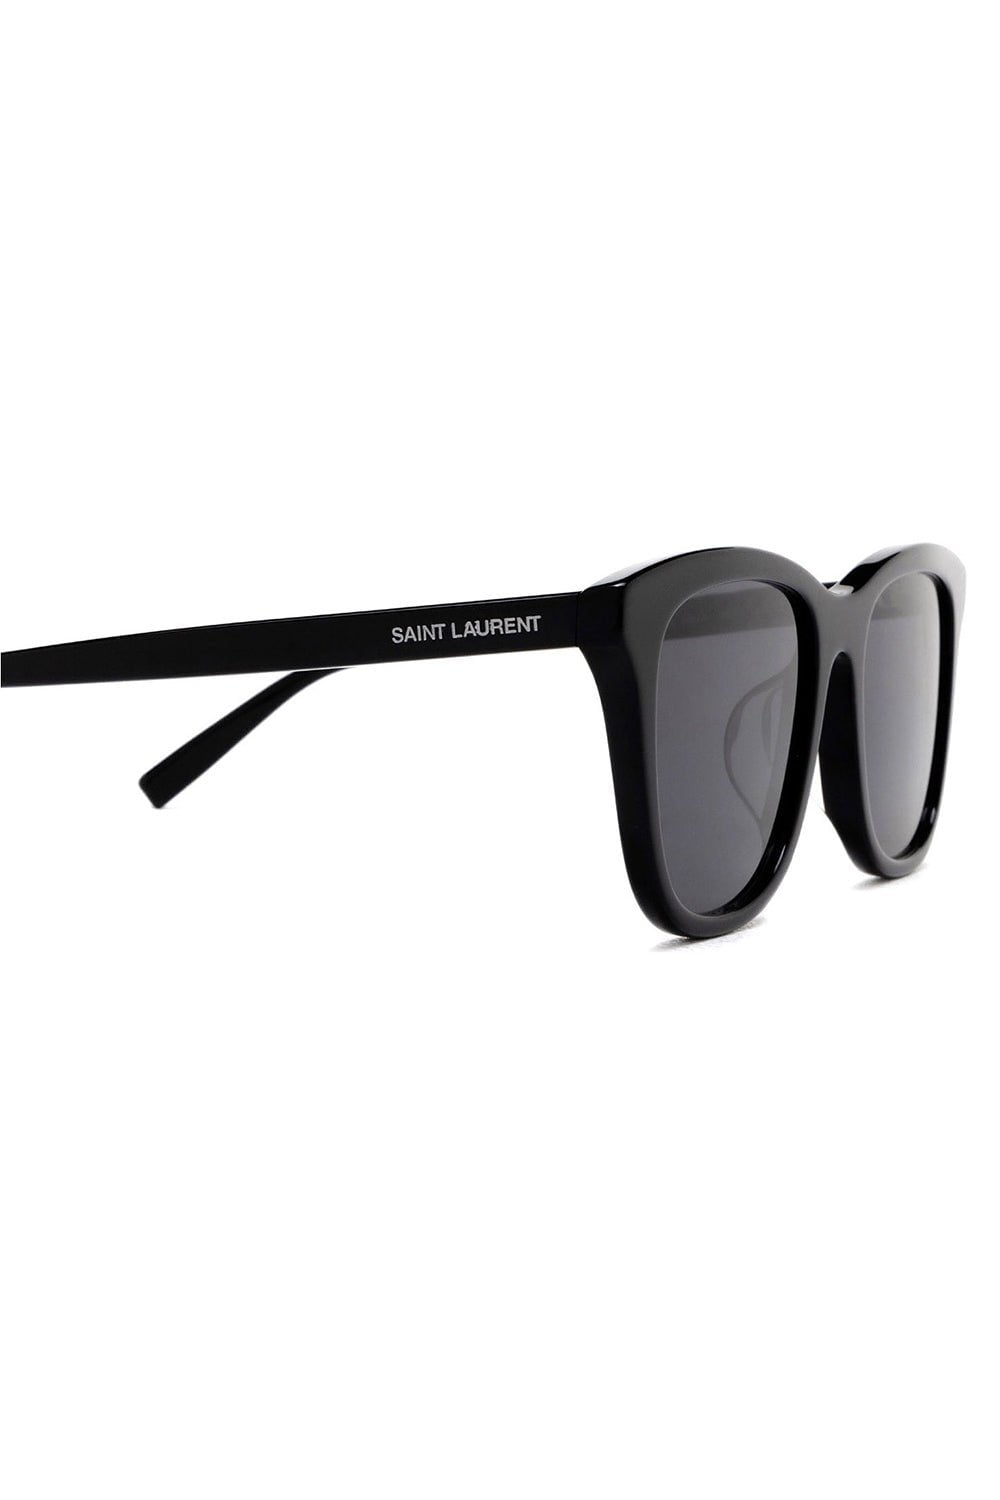 SAINT LAURENT-Classic Sunglasses-BLCK/BLK